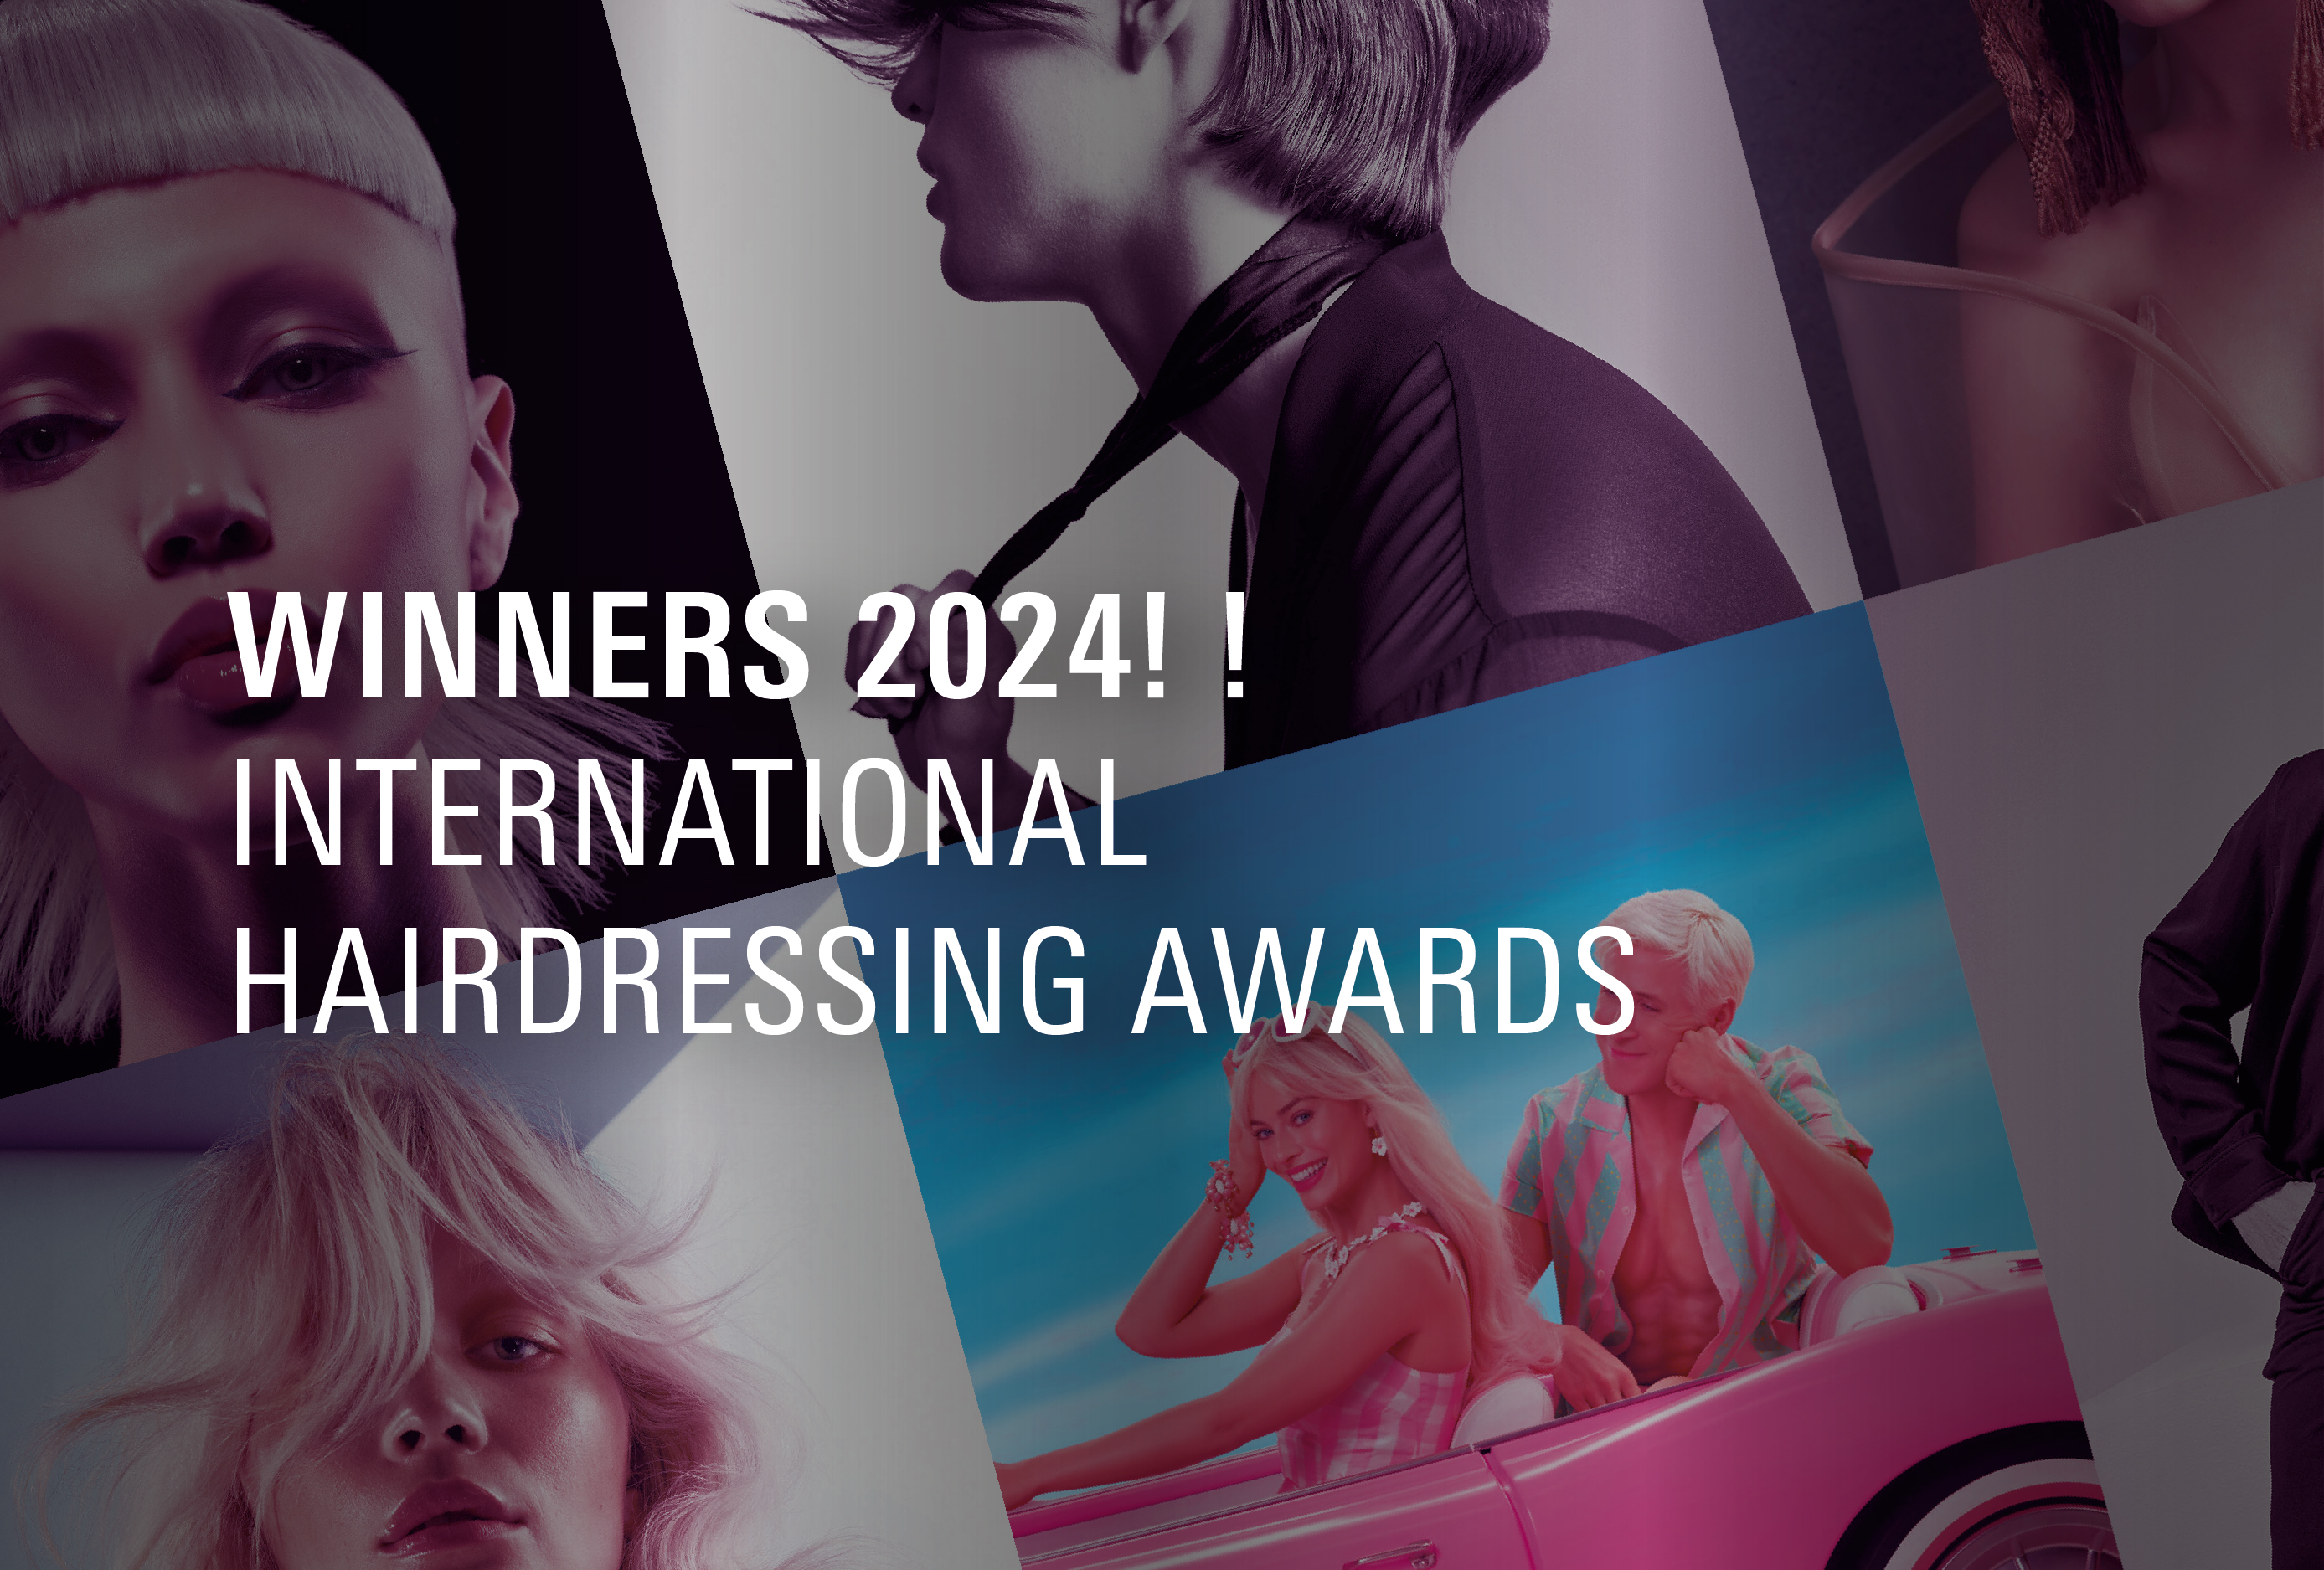 The 2024 International Hairdressing Awards’ winners